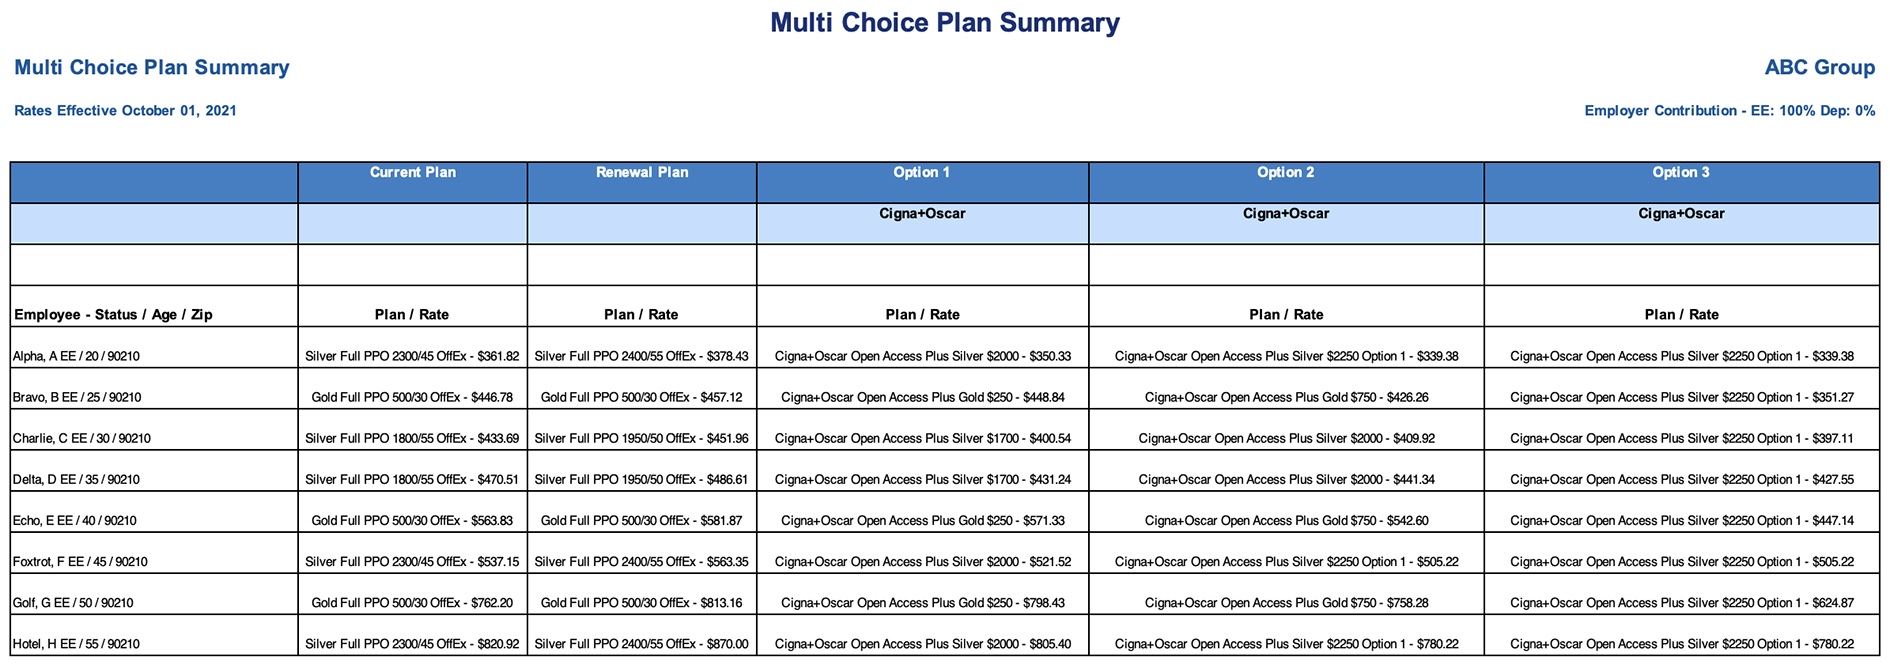 Multi Choice Plan Summary.r1